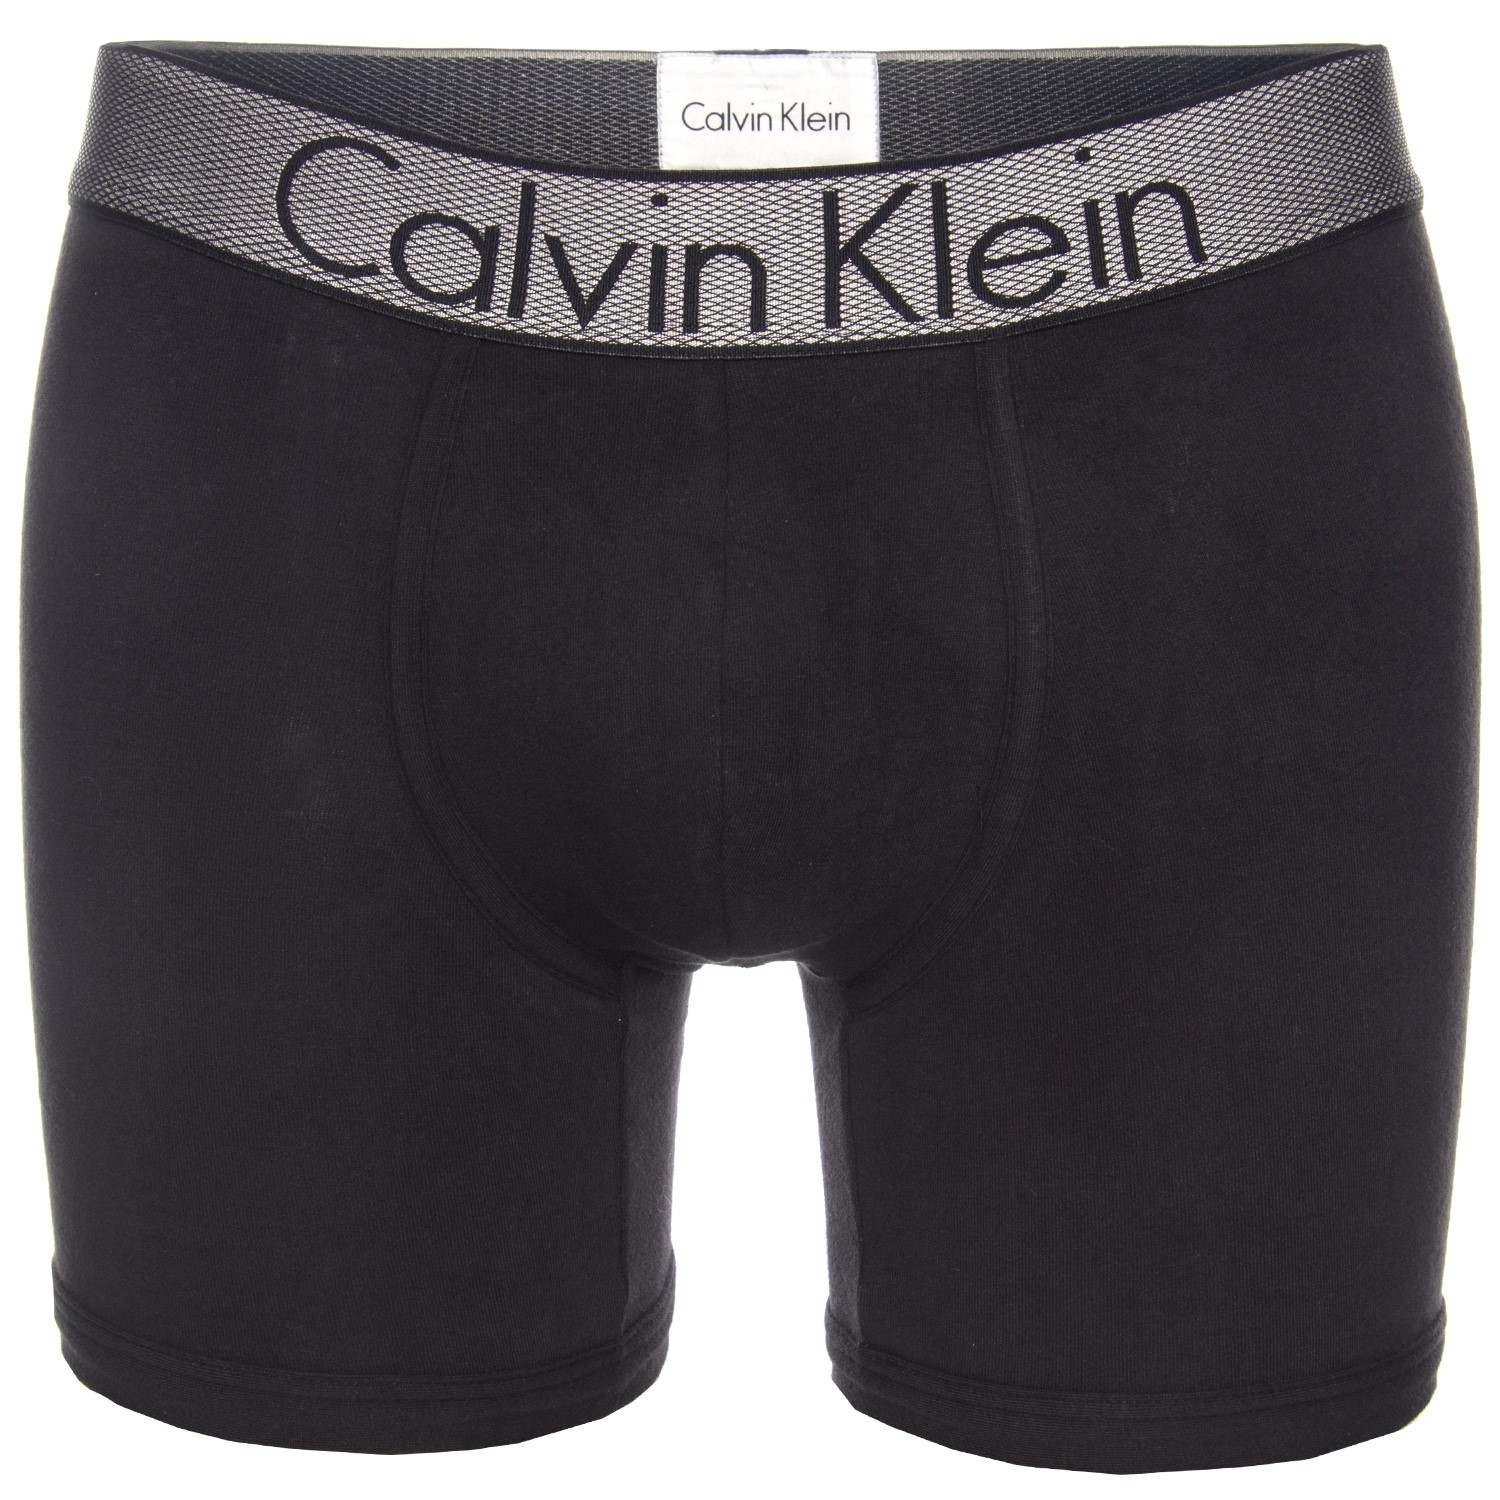 Calvin Klein Customized Stretch Cotton Boxer Brief